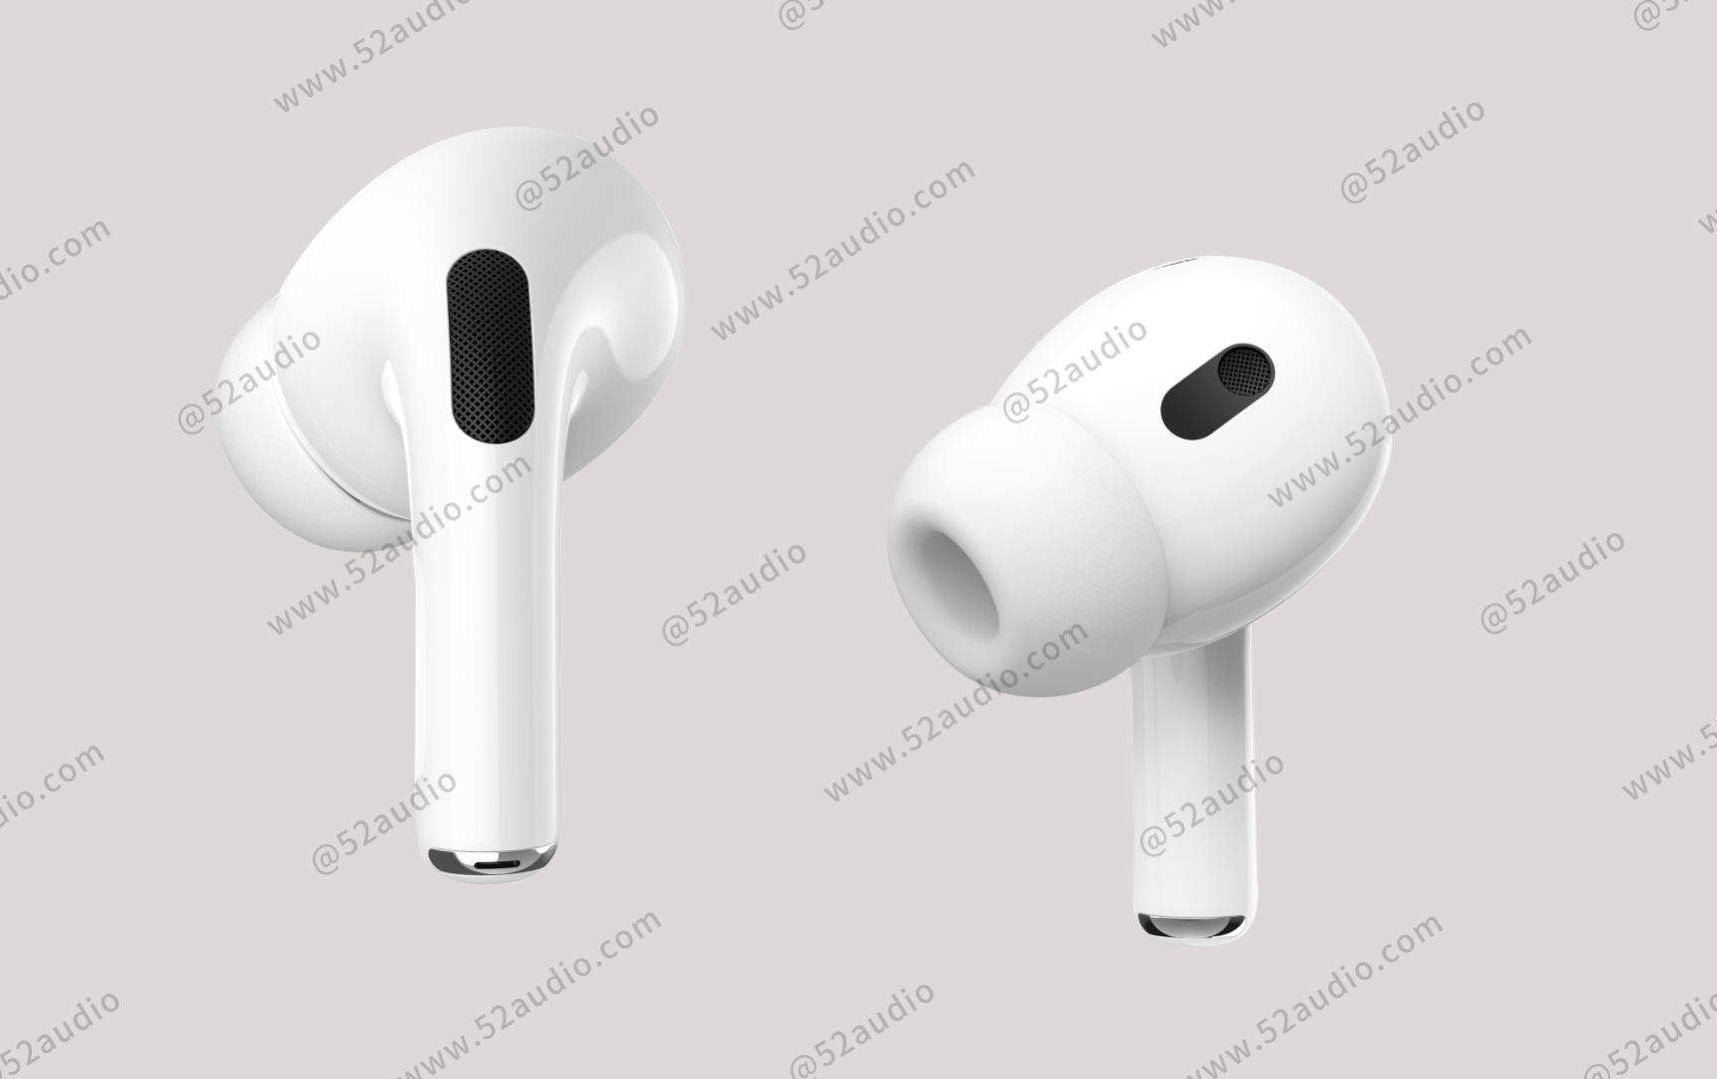 Apple AirPods Pro 2: Design of next-generation premium earbuds